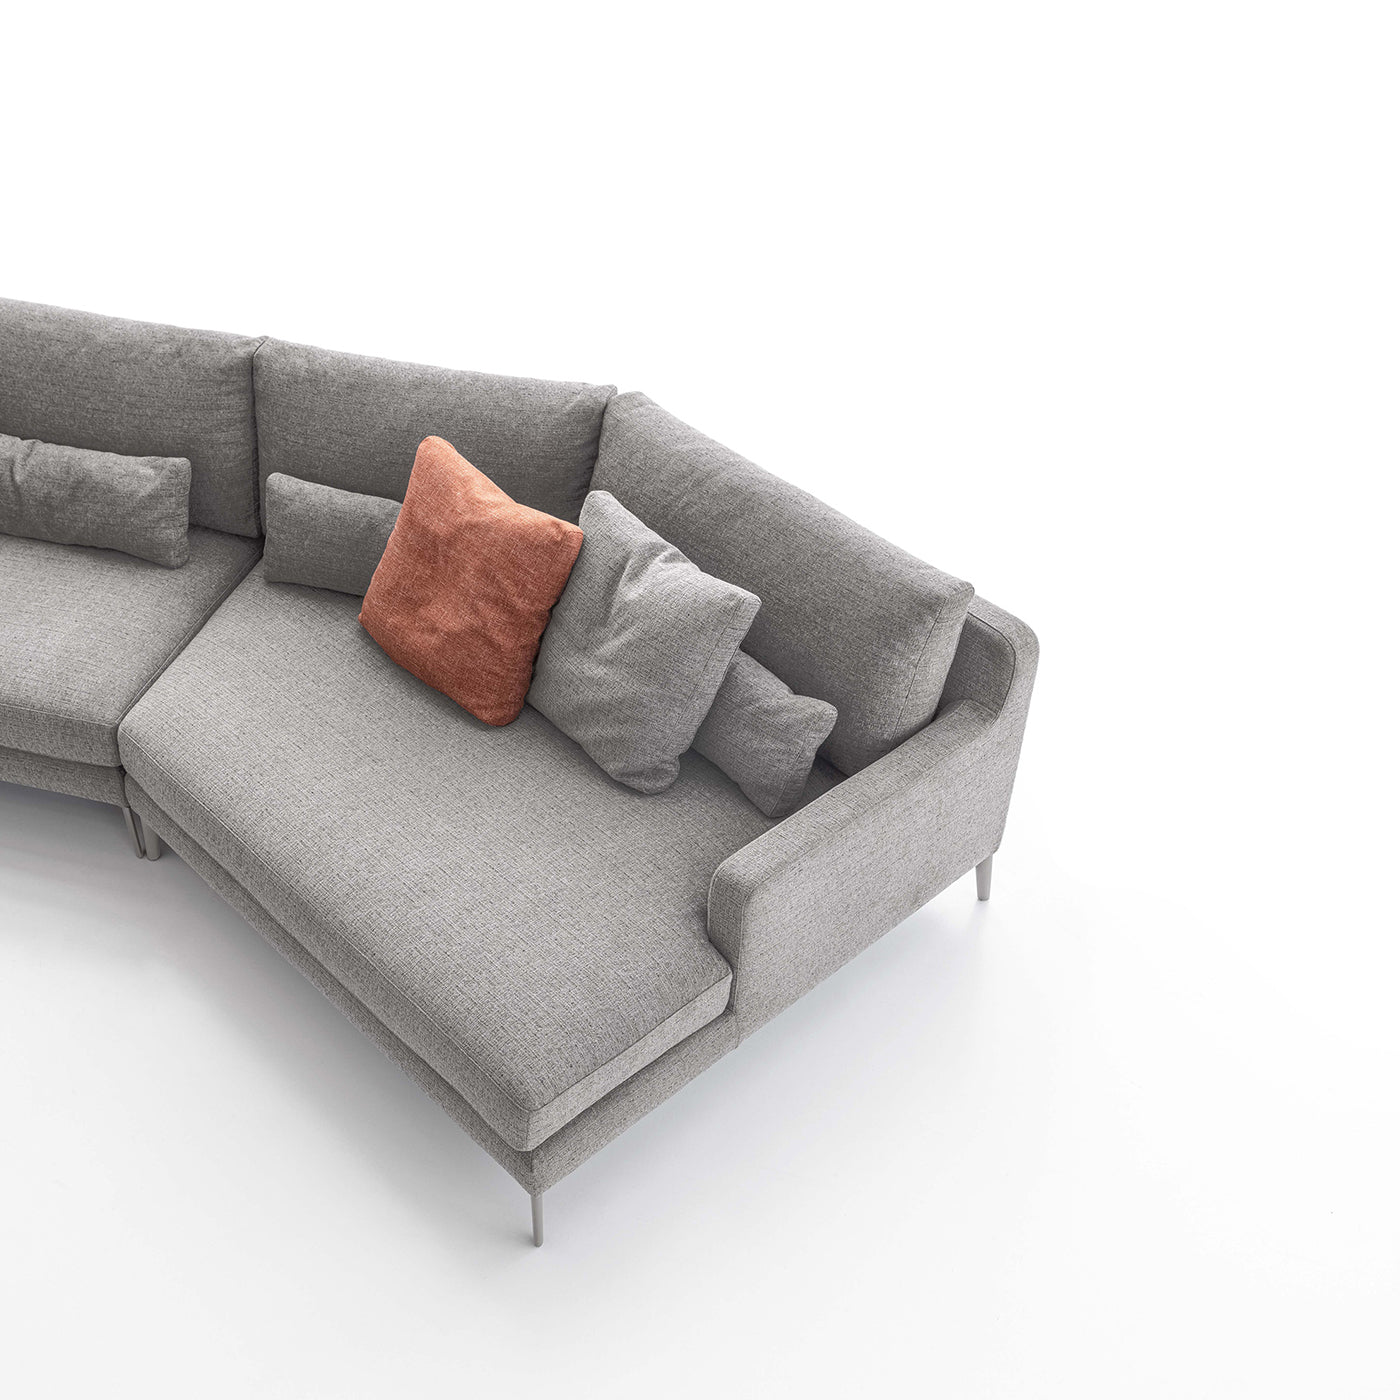 Edward Modular Sofa by Giuseppe Bavuso - Alternative view 2